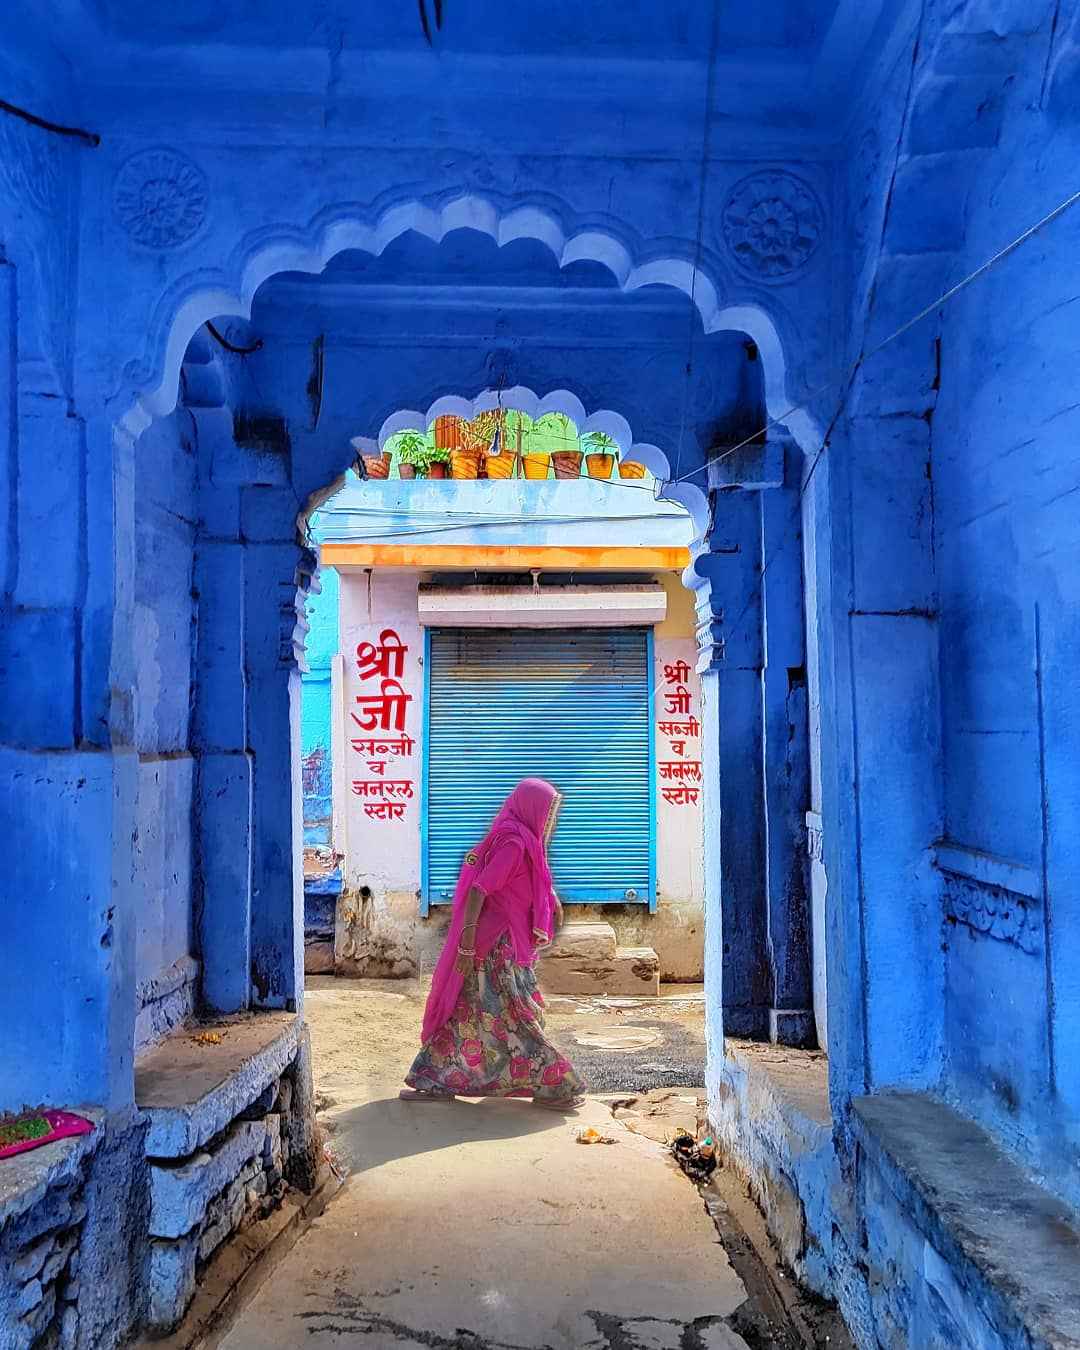 The blue streets of India - Jodhpur - Tripoto